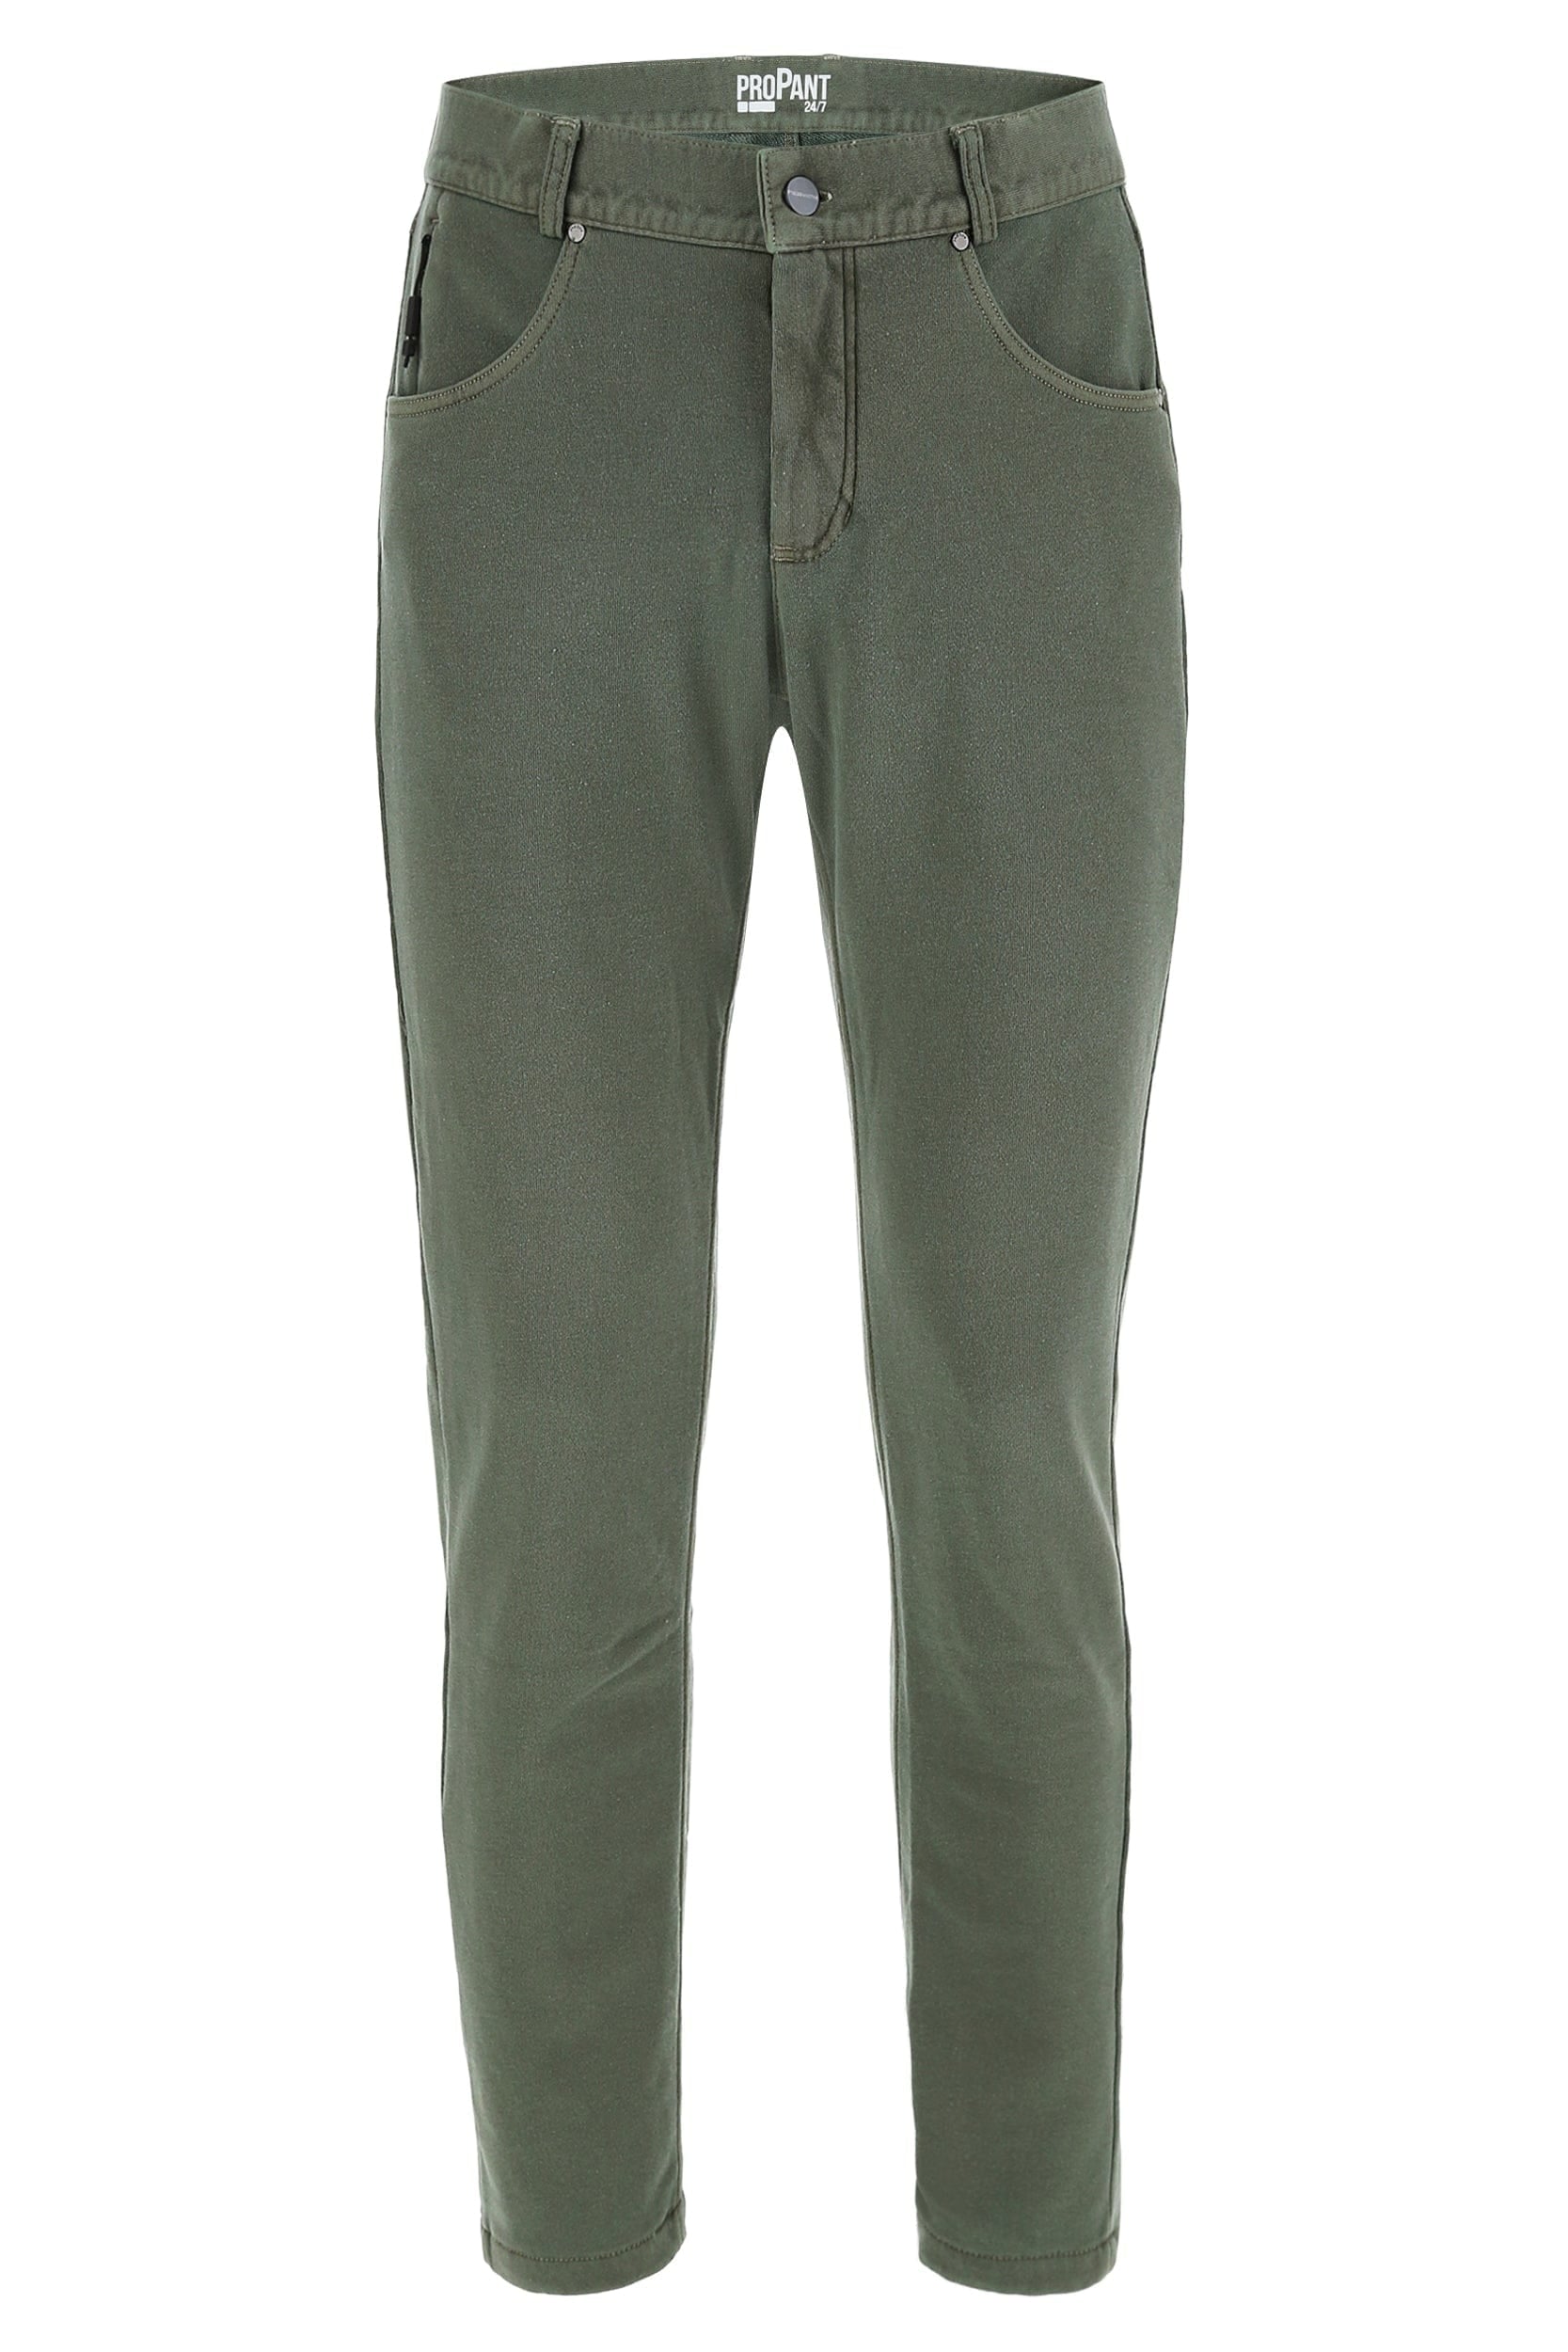 Pantalón chino Propant para hombre - Garment Dyed Green  1